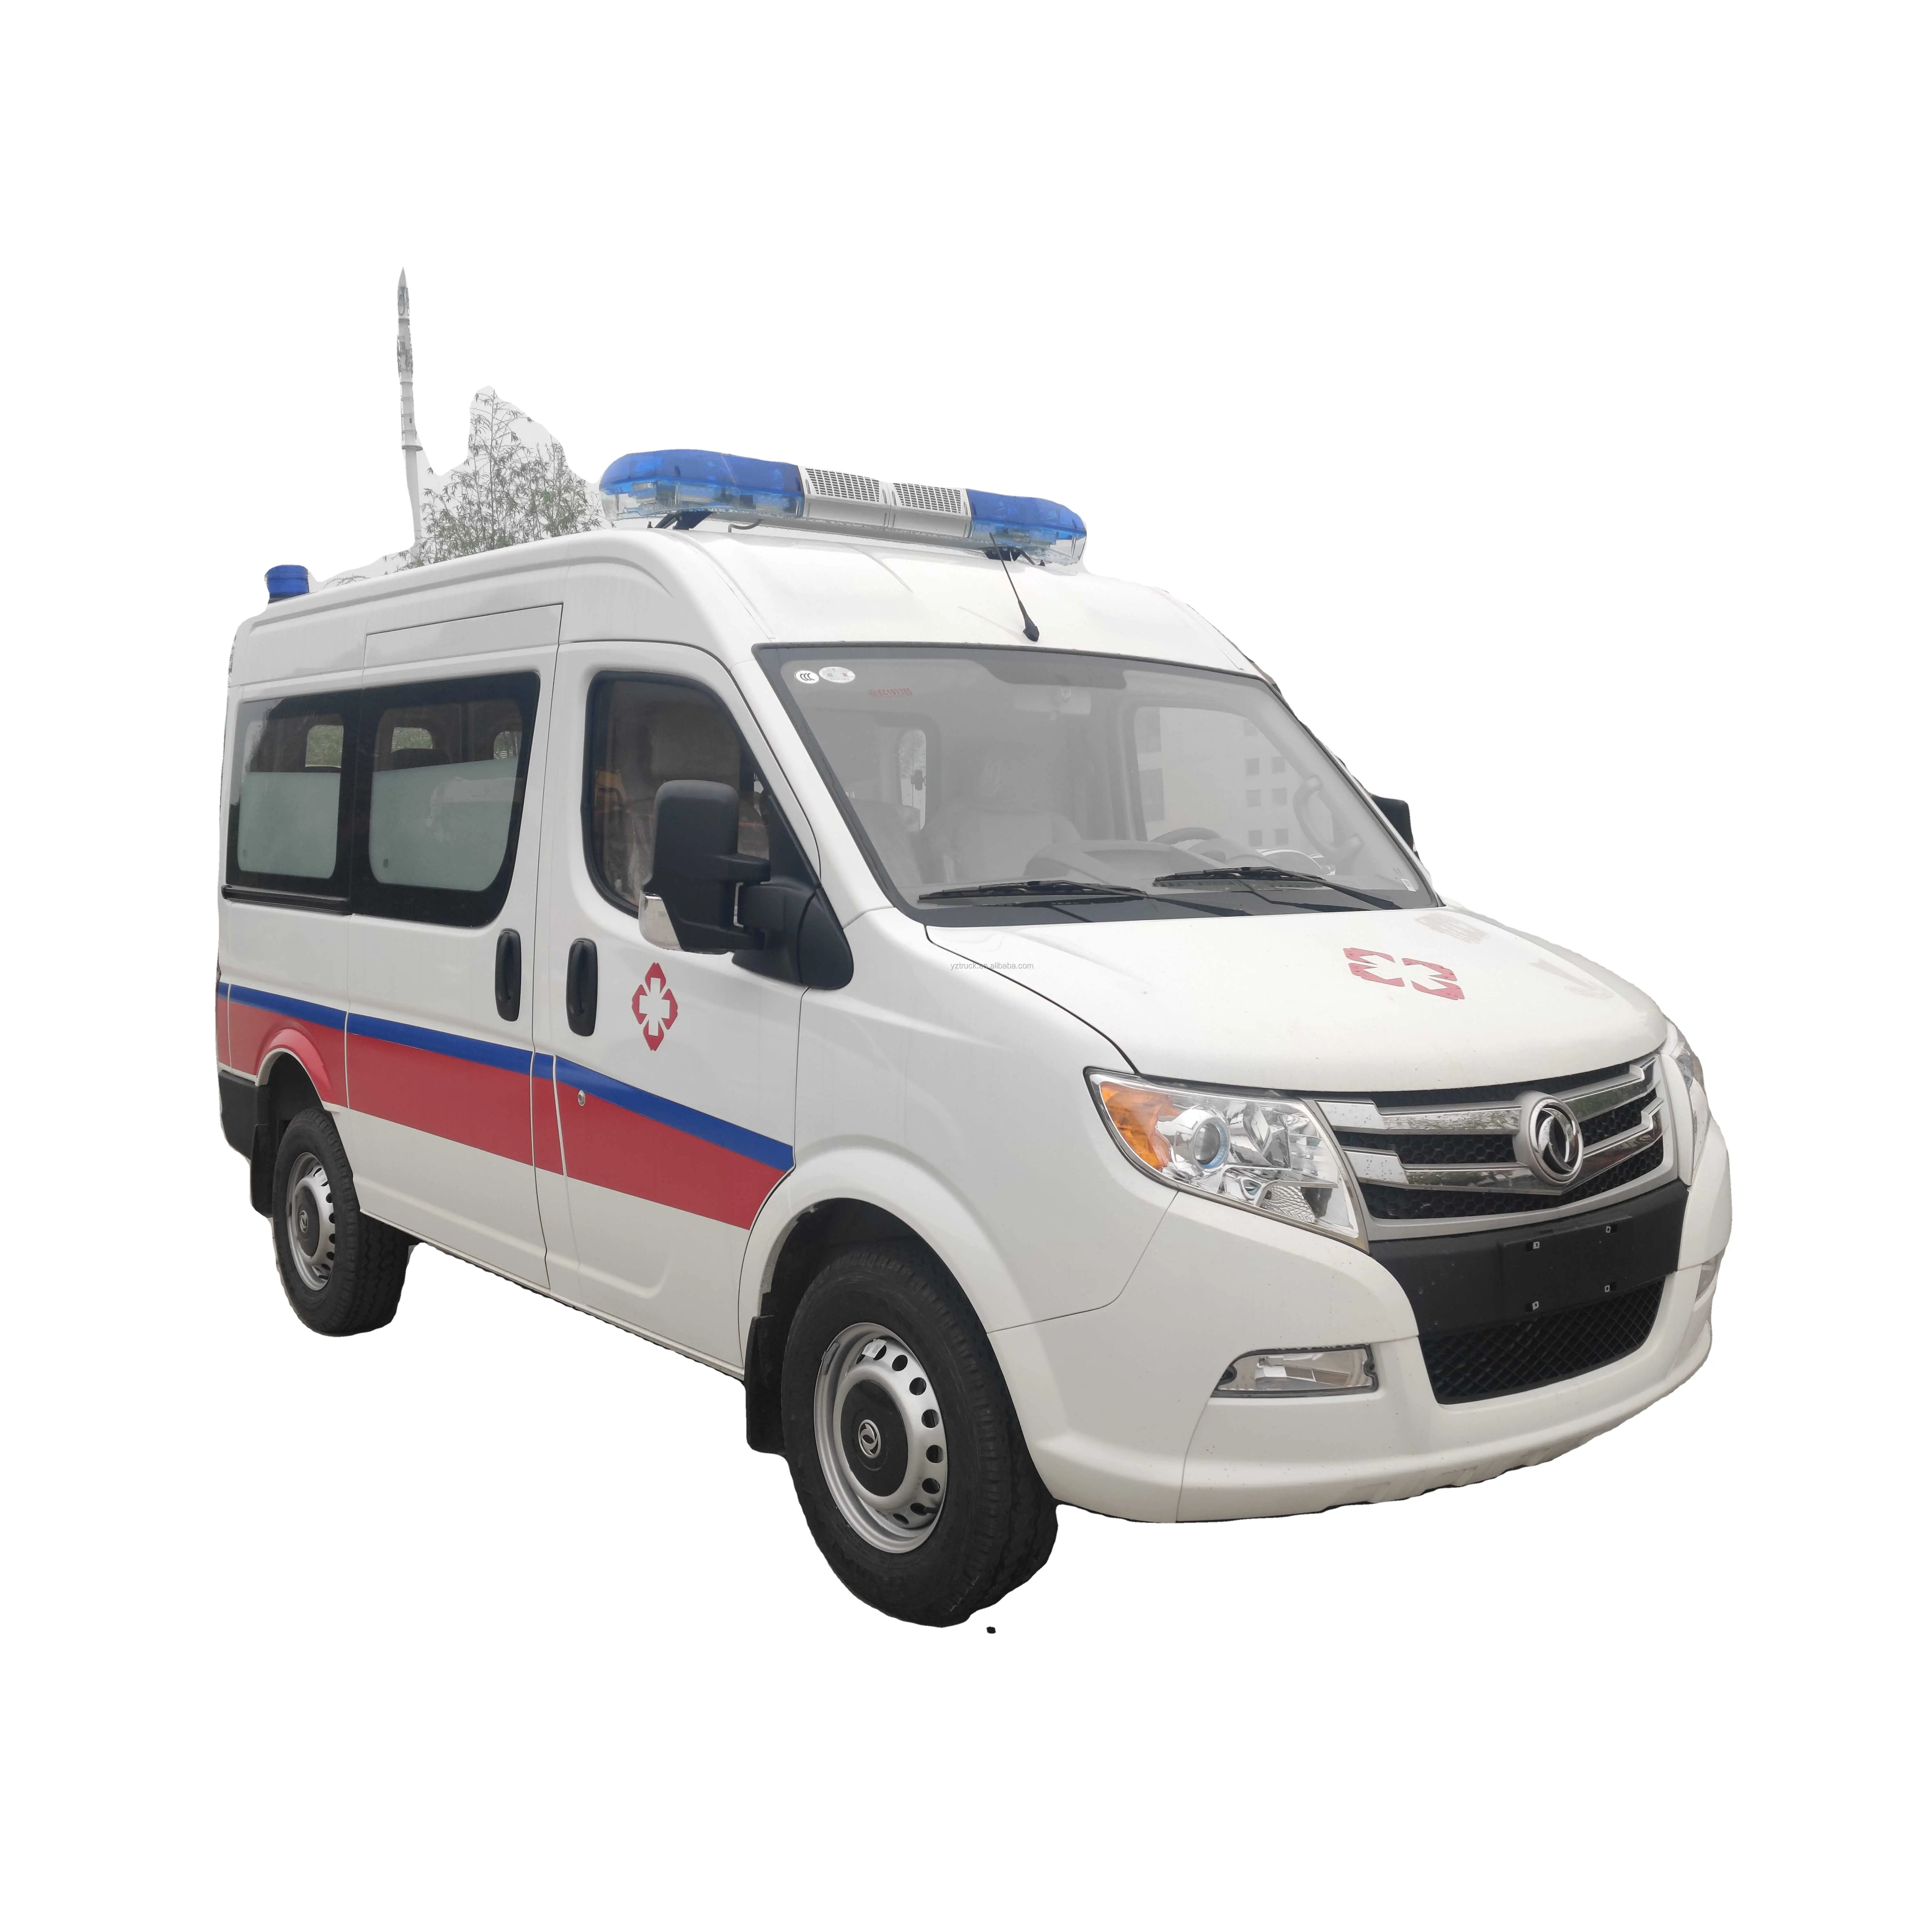 2021 Preço nova ambulância móvel para UTI hospitalar para cuidados intensivos